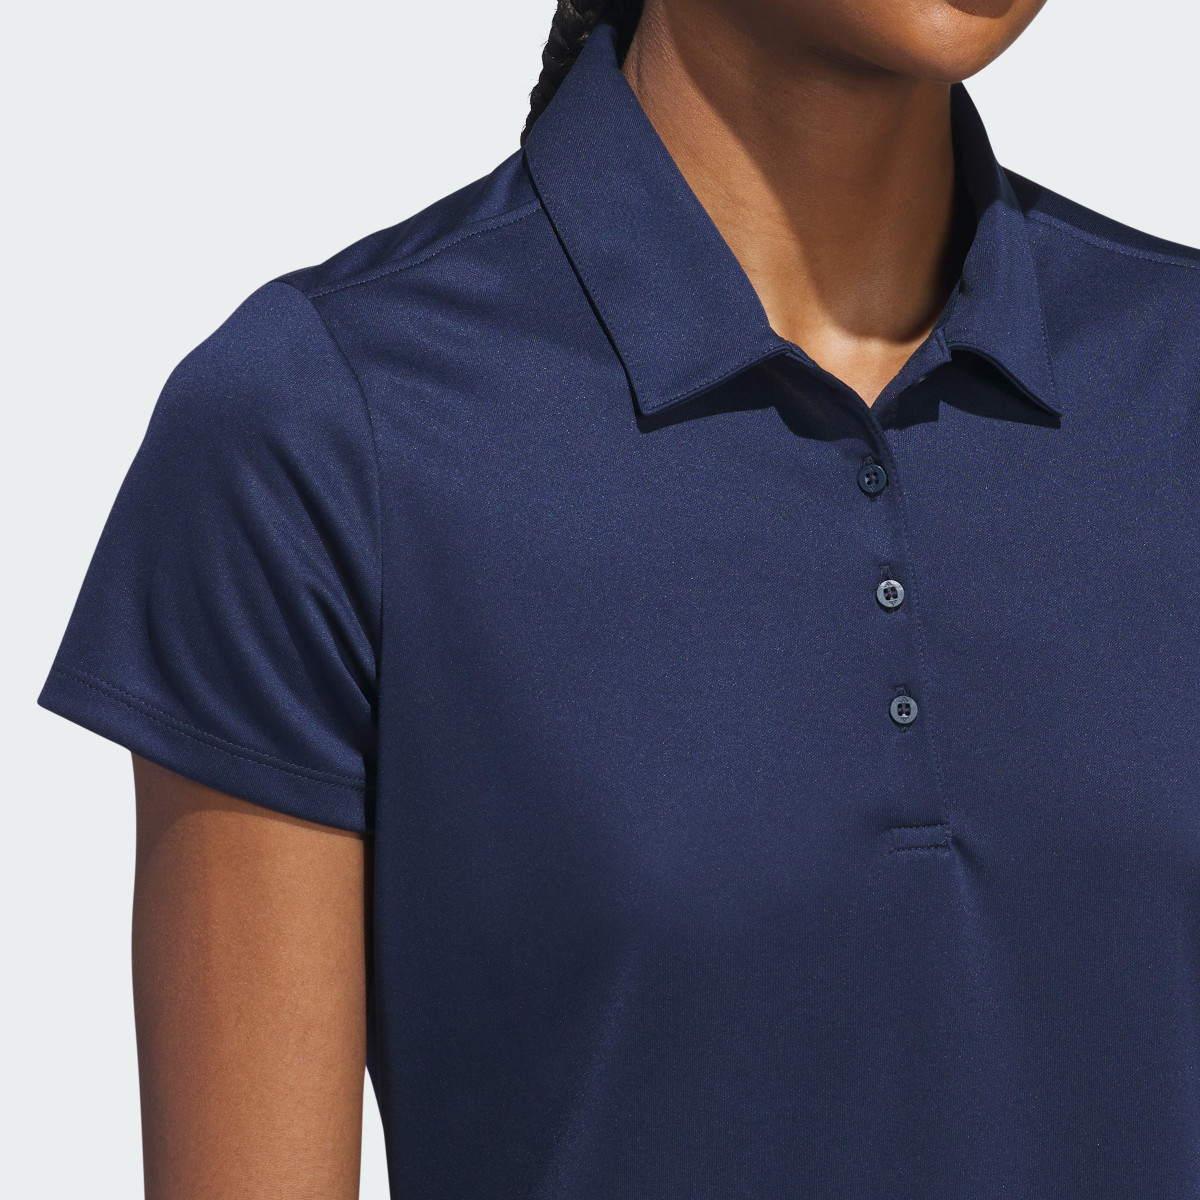 Adidas Women's Solid Performance Short Sleeve Polo Shirt. 6